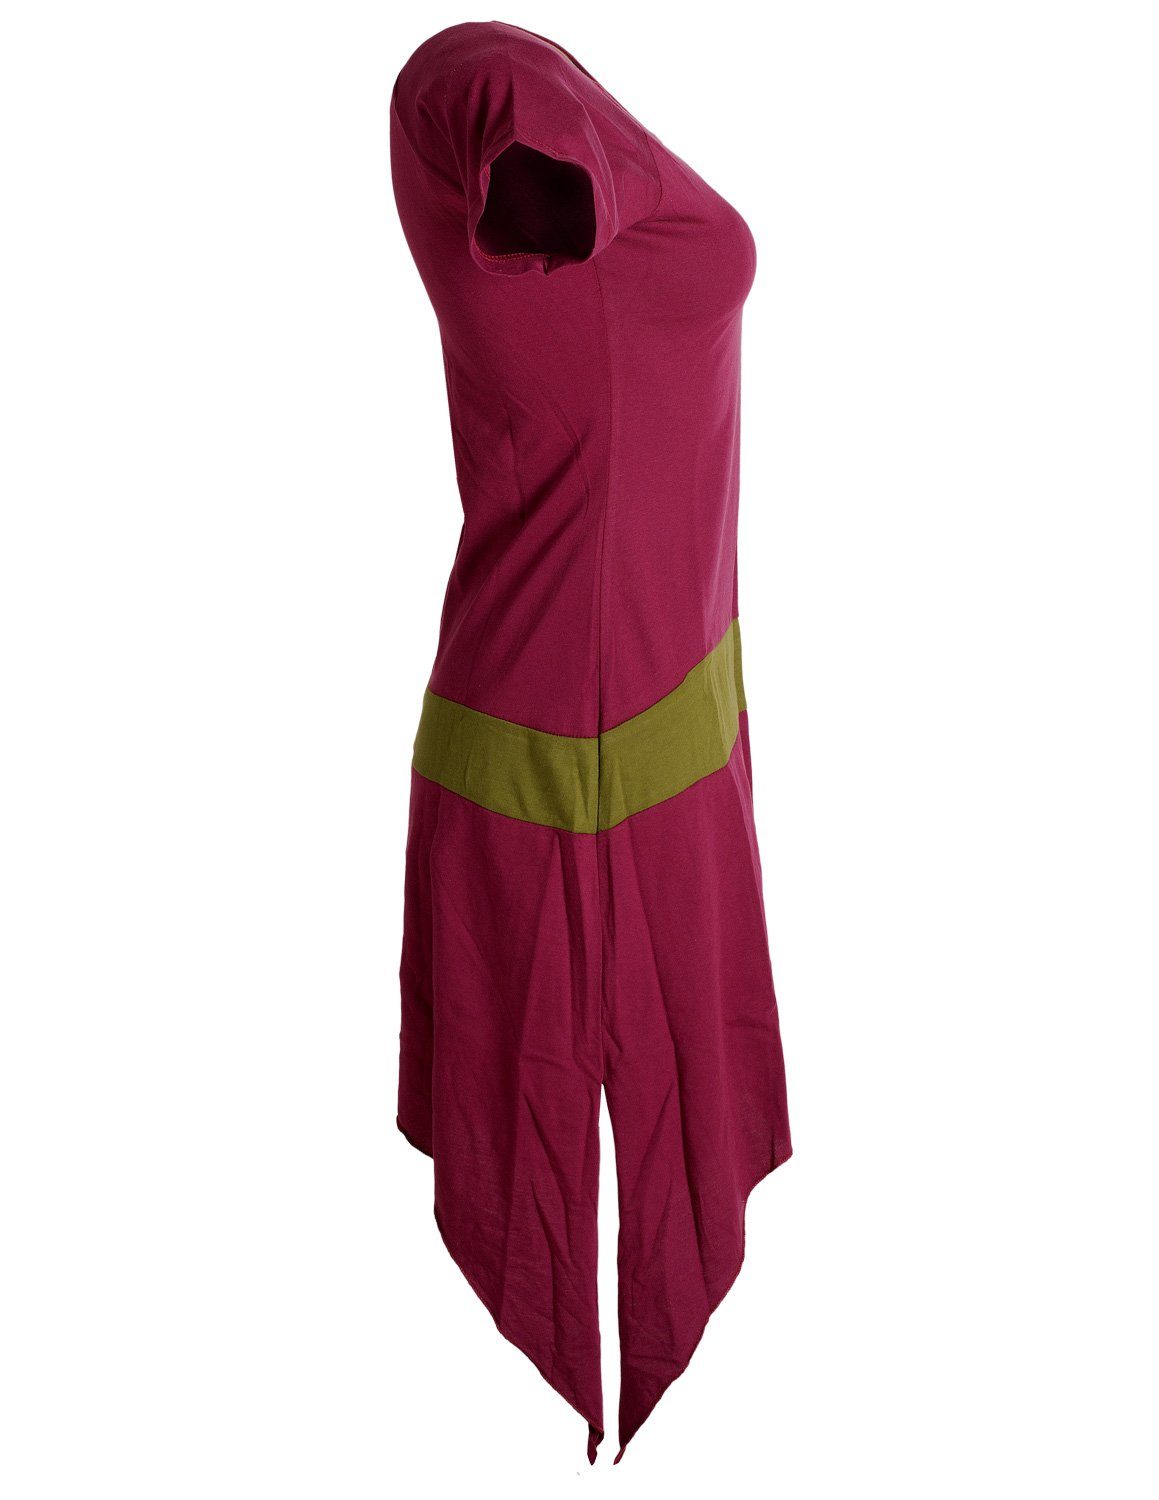 Style Longshirt, aus Einfaches Baumwolle kurzärmliges Zipfelkleid Vishes dunkelrot Sommerkleid Tunika, Hippie